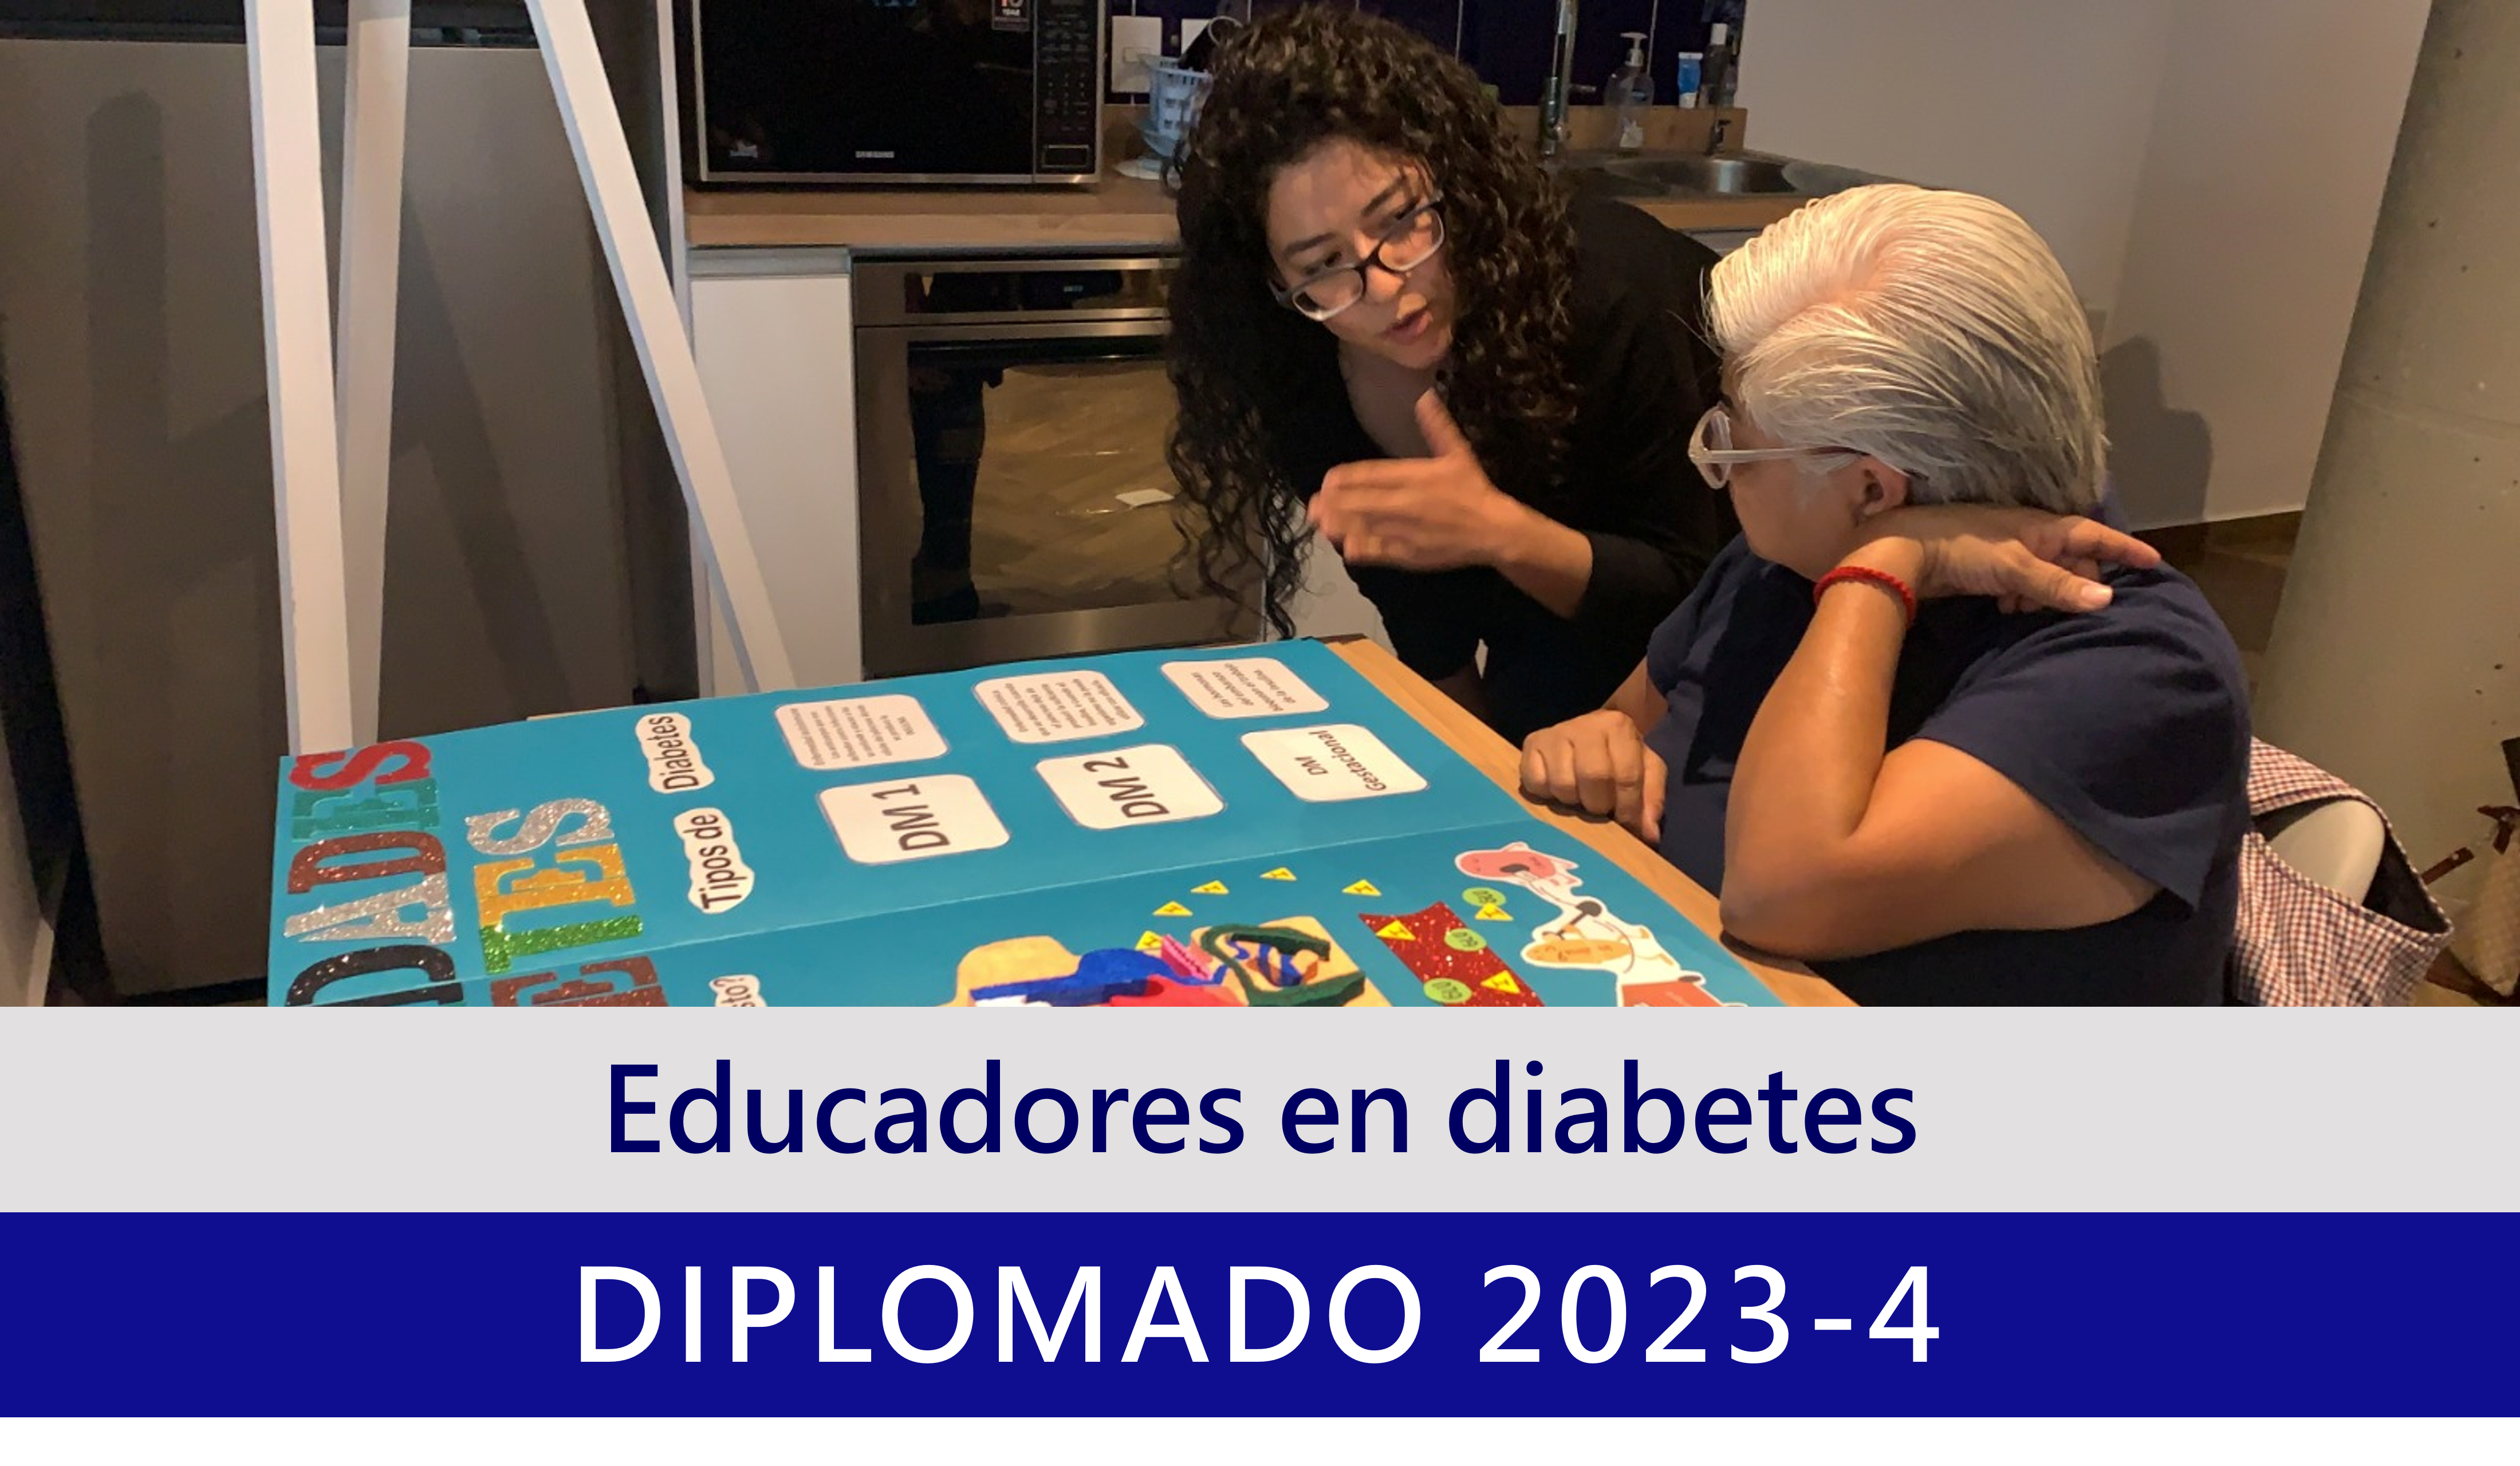 Diplomado de Educadores en Diabetes 2023-4